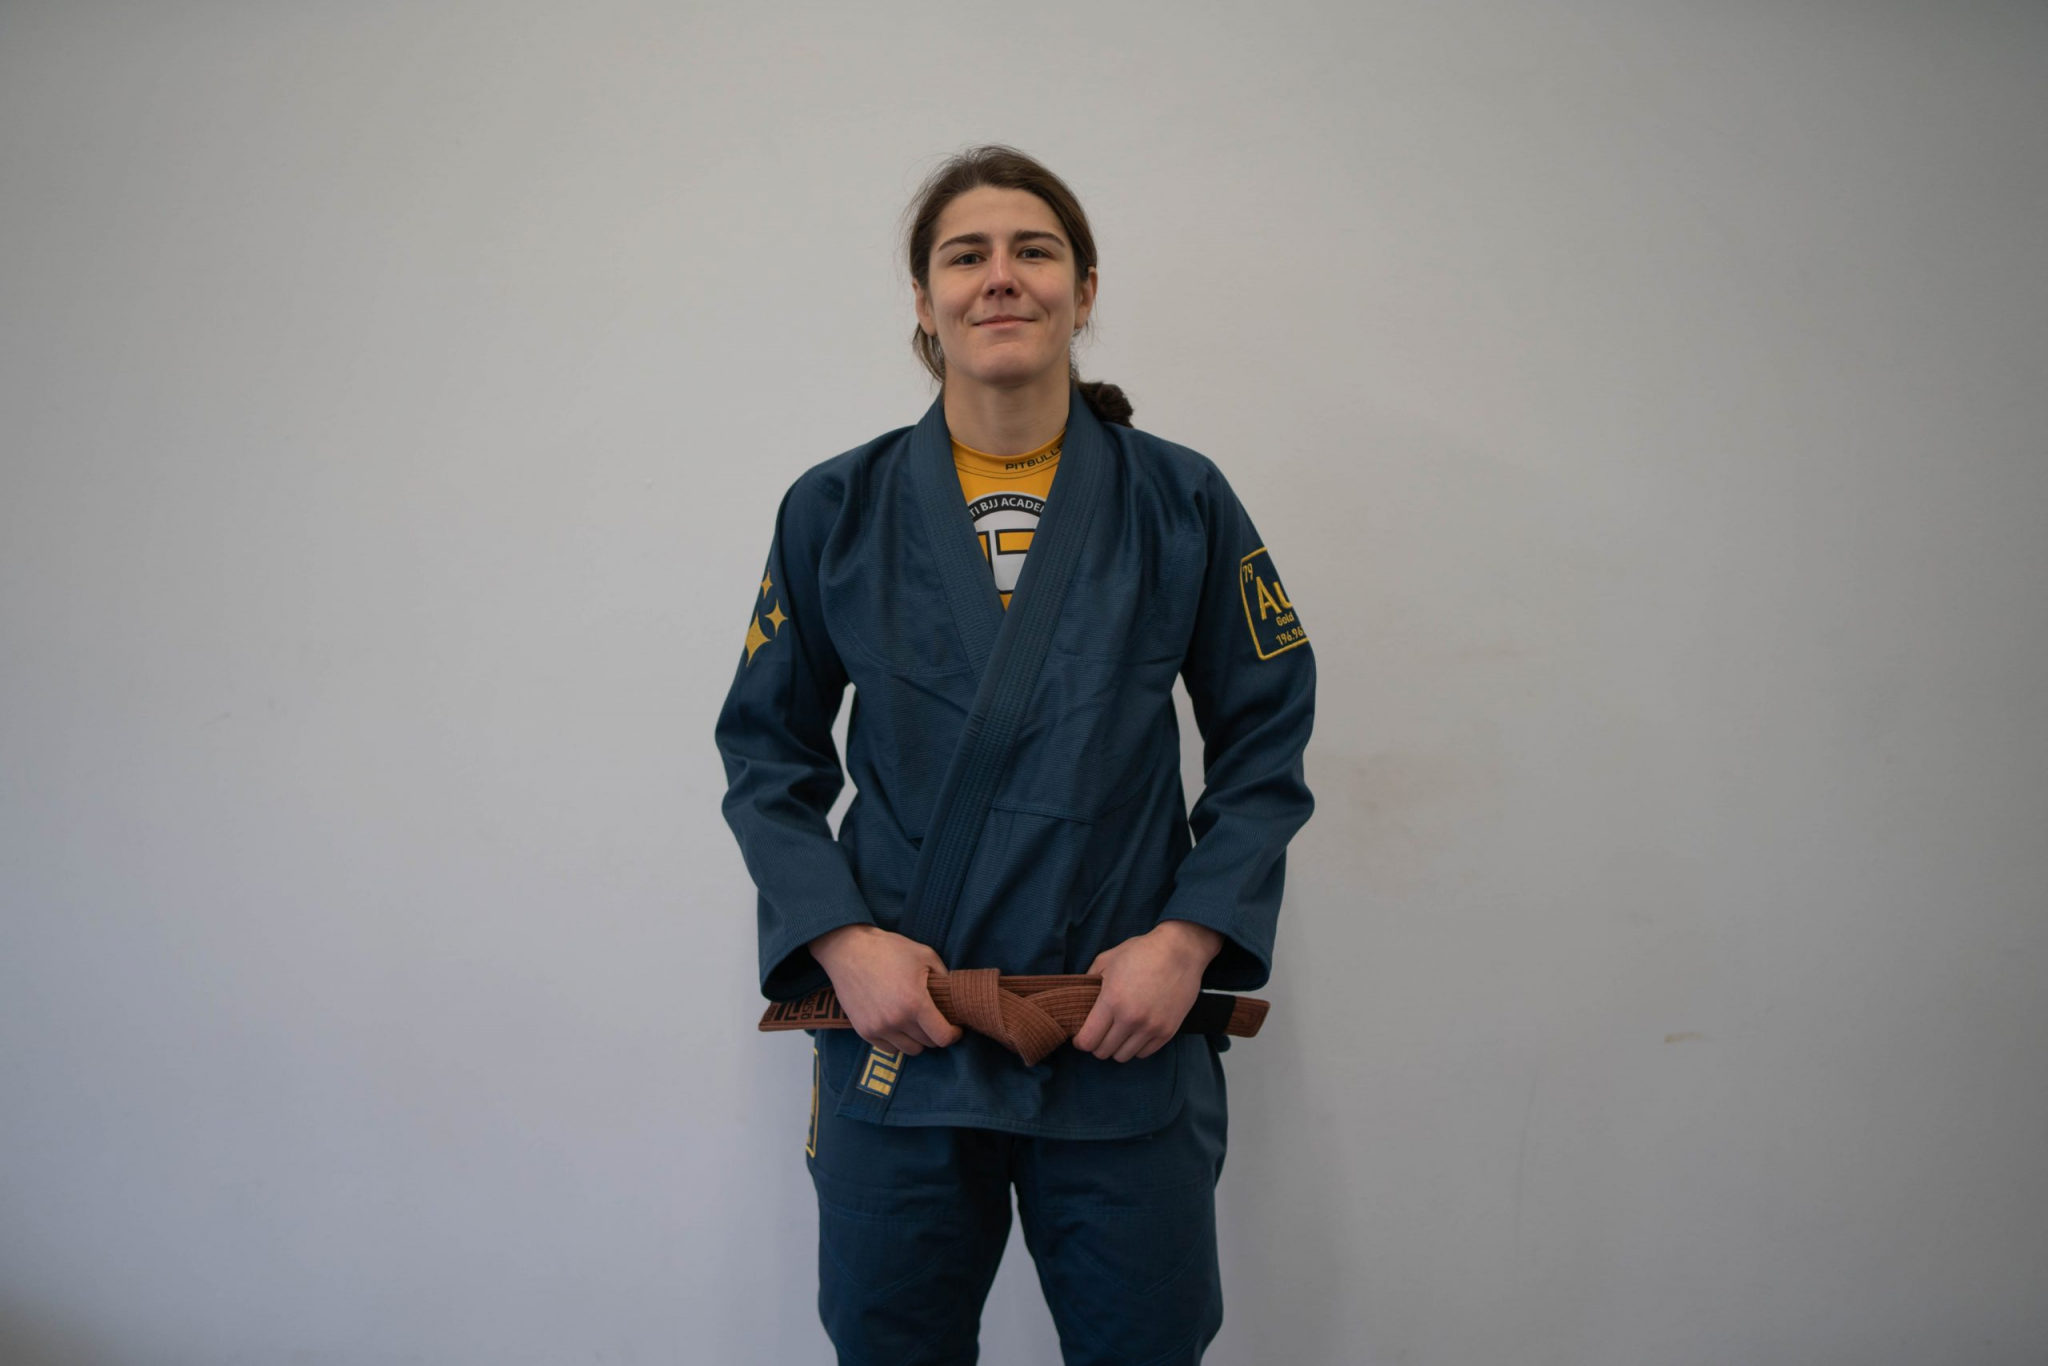 Germany's double world champion Denise Krahn is one of three members of the Ju-Jitsu European Union's newly established Athletes Commission ©JJEU